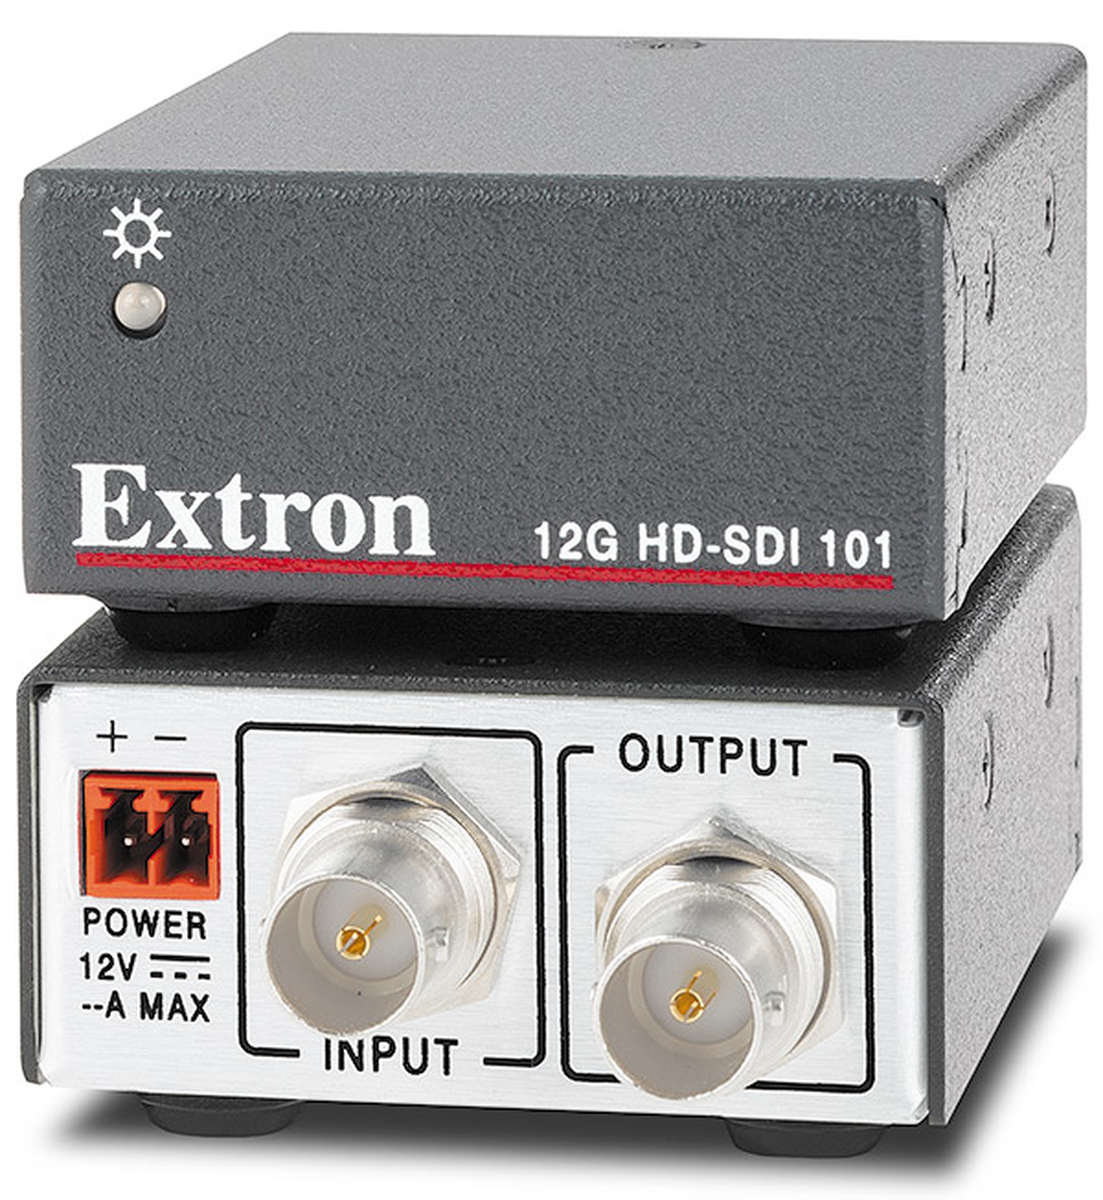 Extron 12G HD-SDI 101 60-1673-01  product image